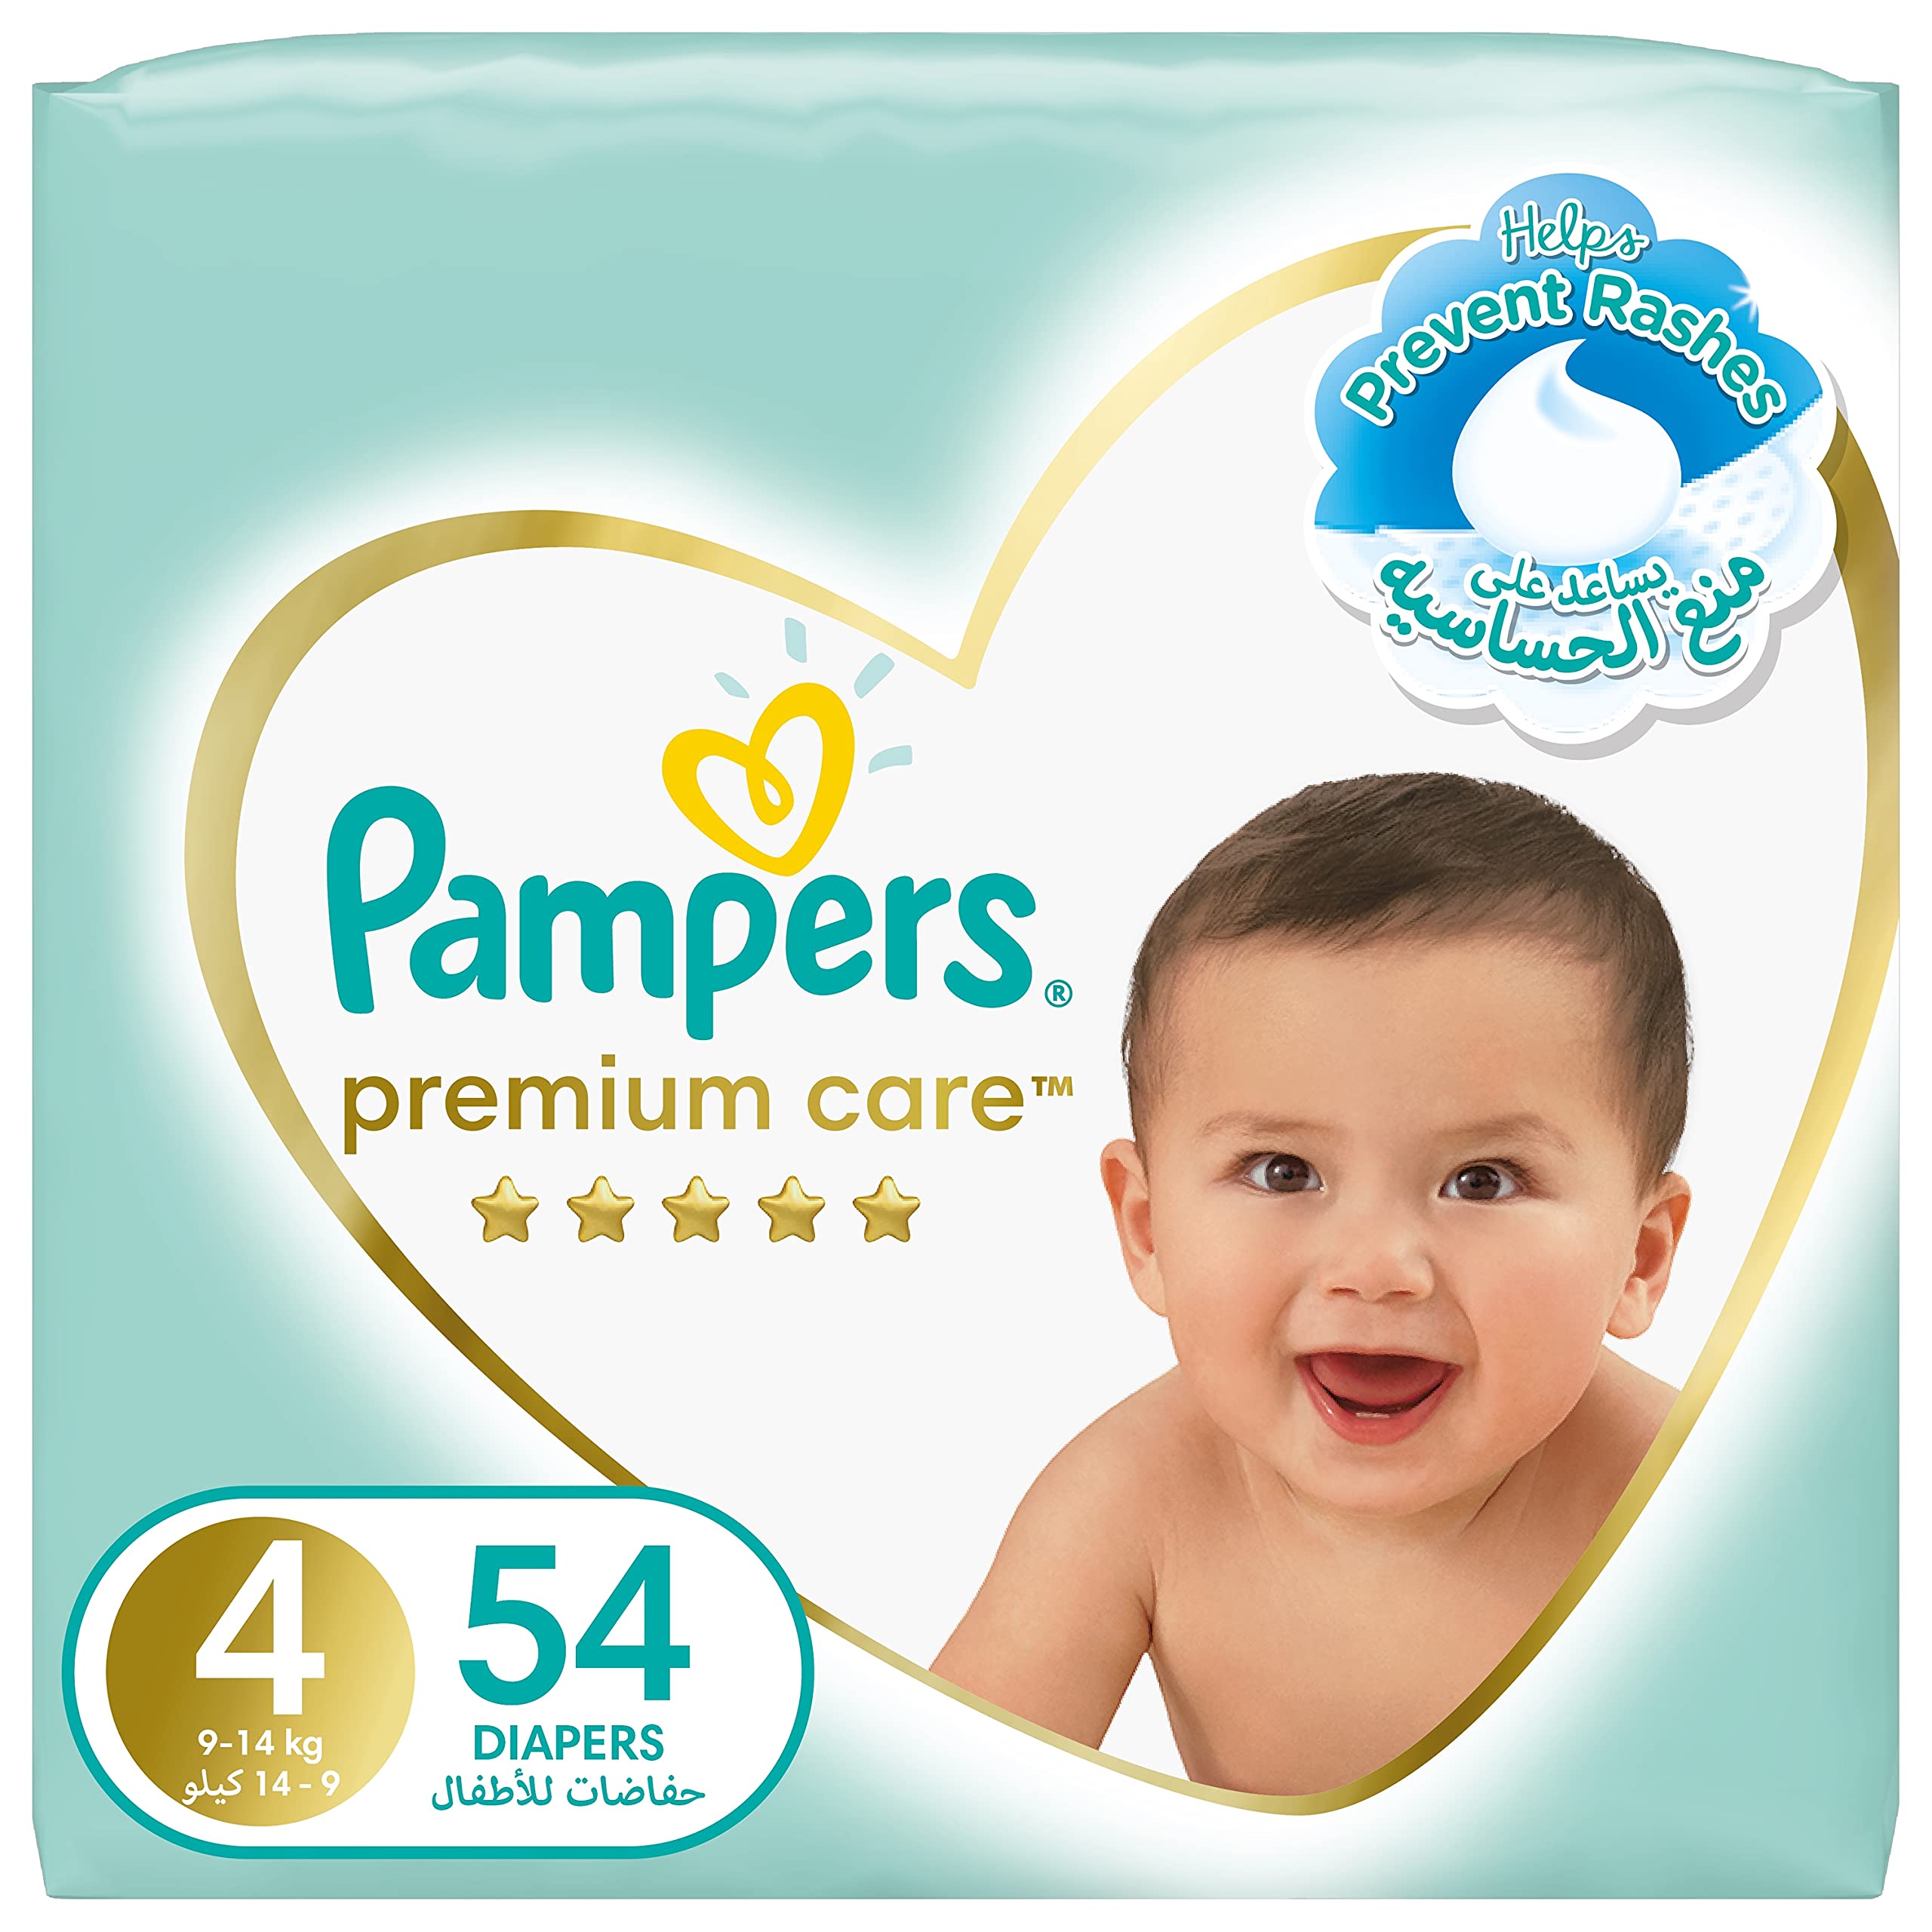 Pampers Premium Care Diapers, Size 4, 9-14 kg, The Softest Diaper and the Best Skin Protection, 54 Baby Diapers حفاضات بامبرز بريميوم كير، مقاس 4، 9-14 كغم، انعم حفاضات وافضل حماية للبشرة، 54 حفاضة للاطفال